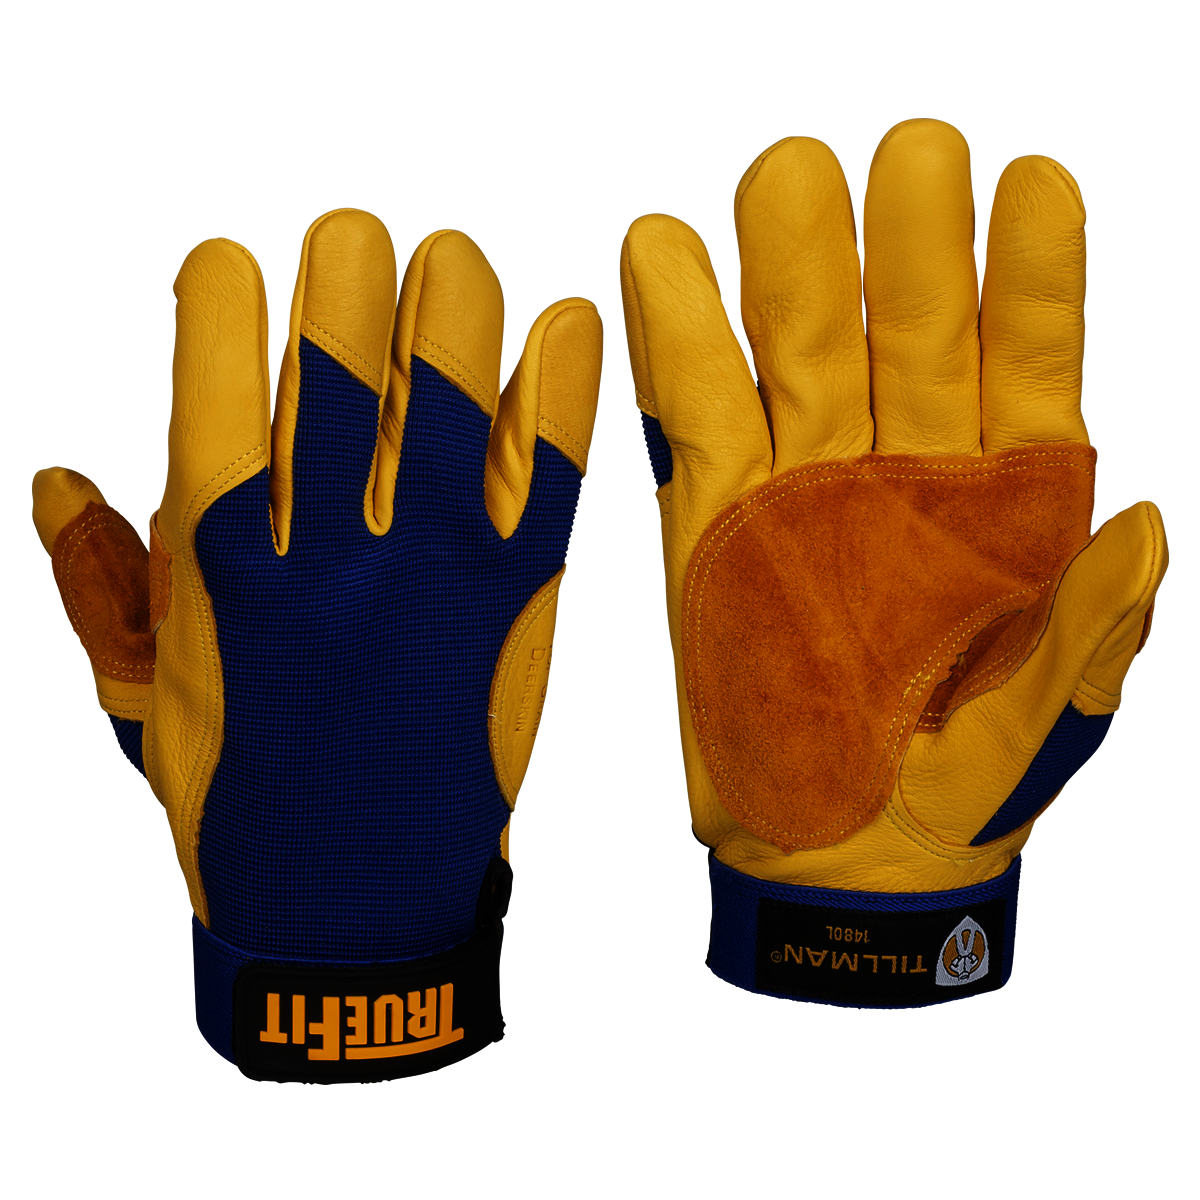 1480 True Fit Premium Top Grain Deerskin Work Gloves - Small - Tillman - 1480S